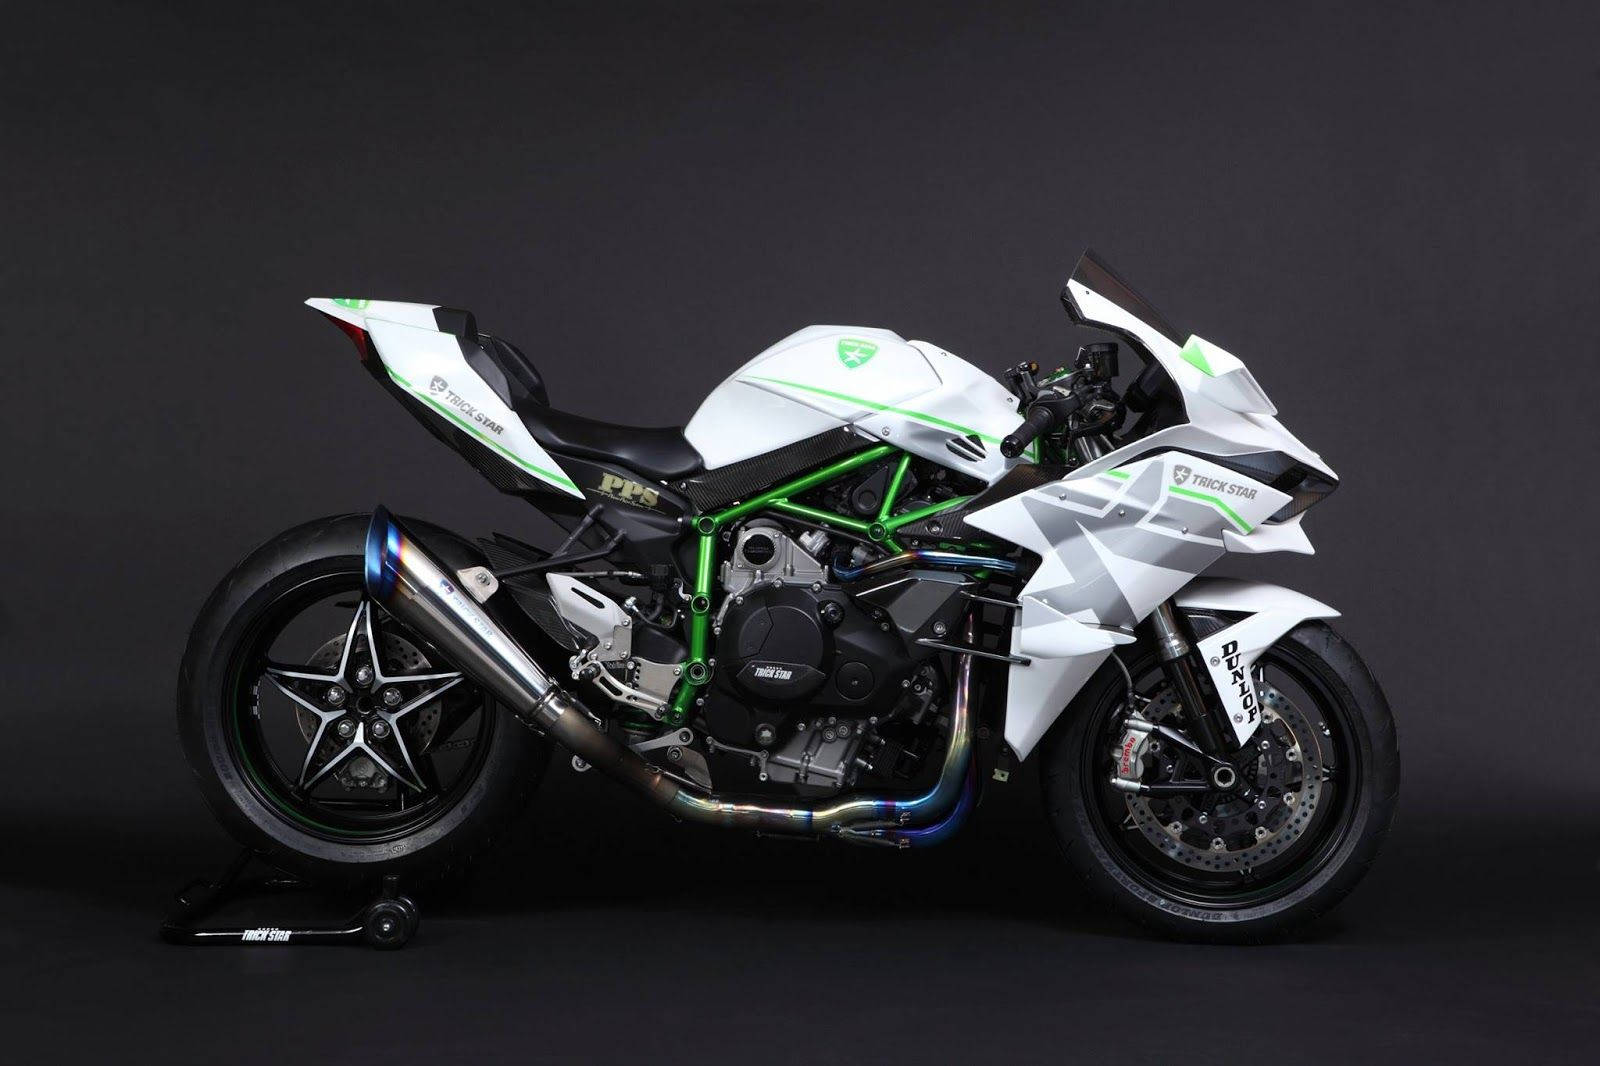 Exhilarating Power - The White And Black Kawasaki H2r